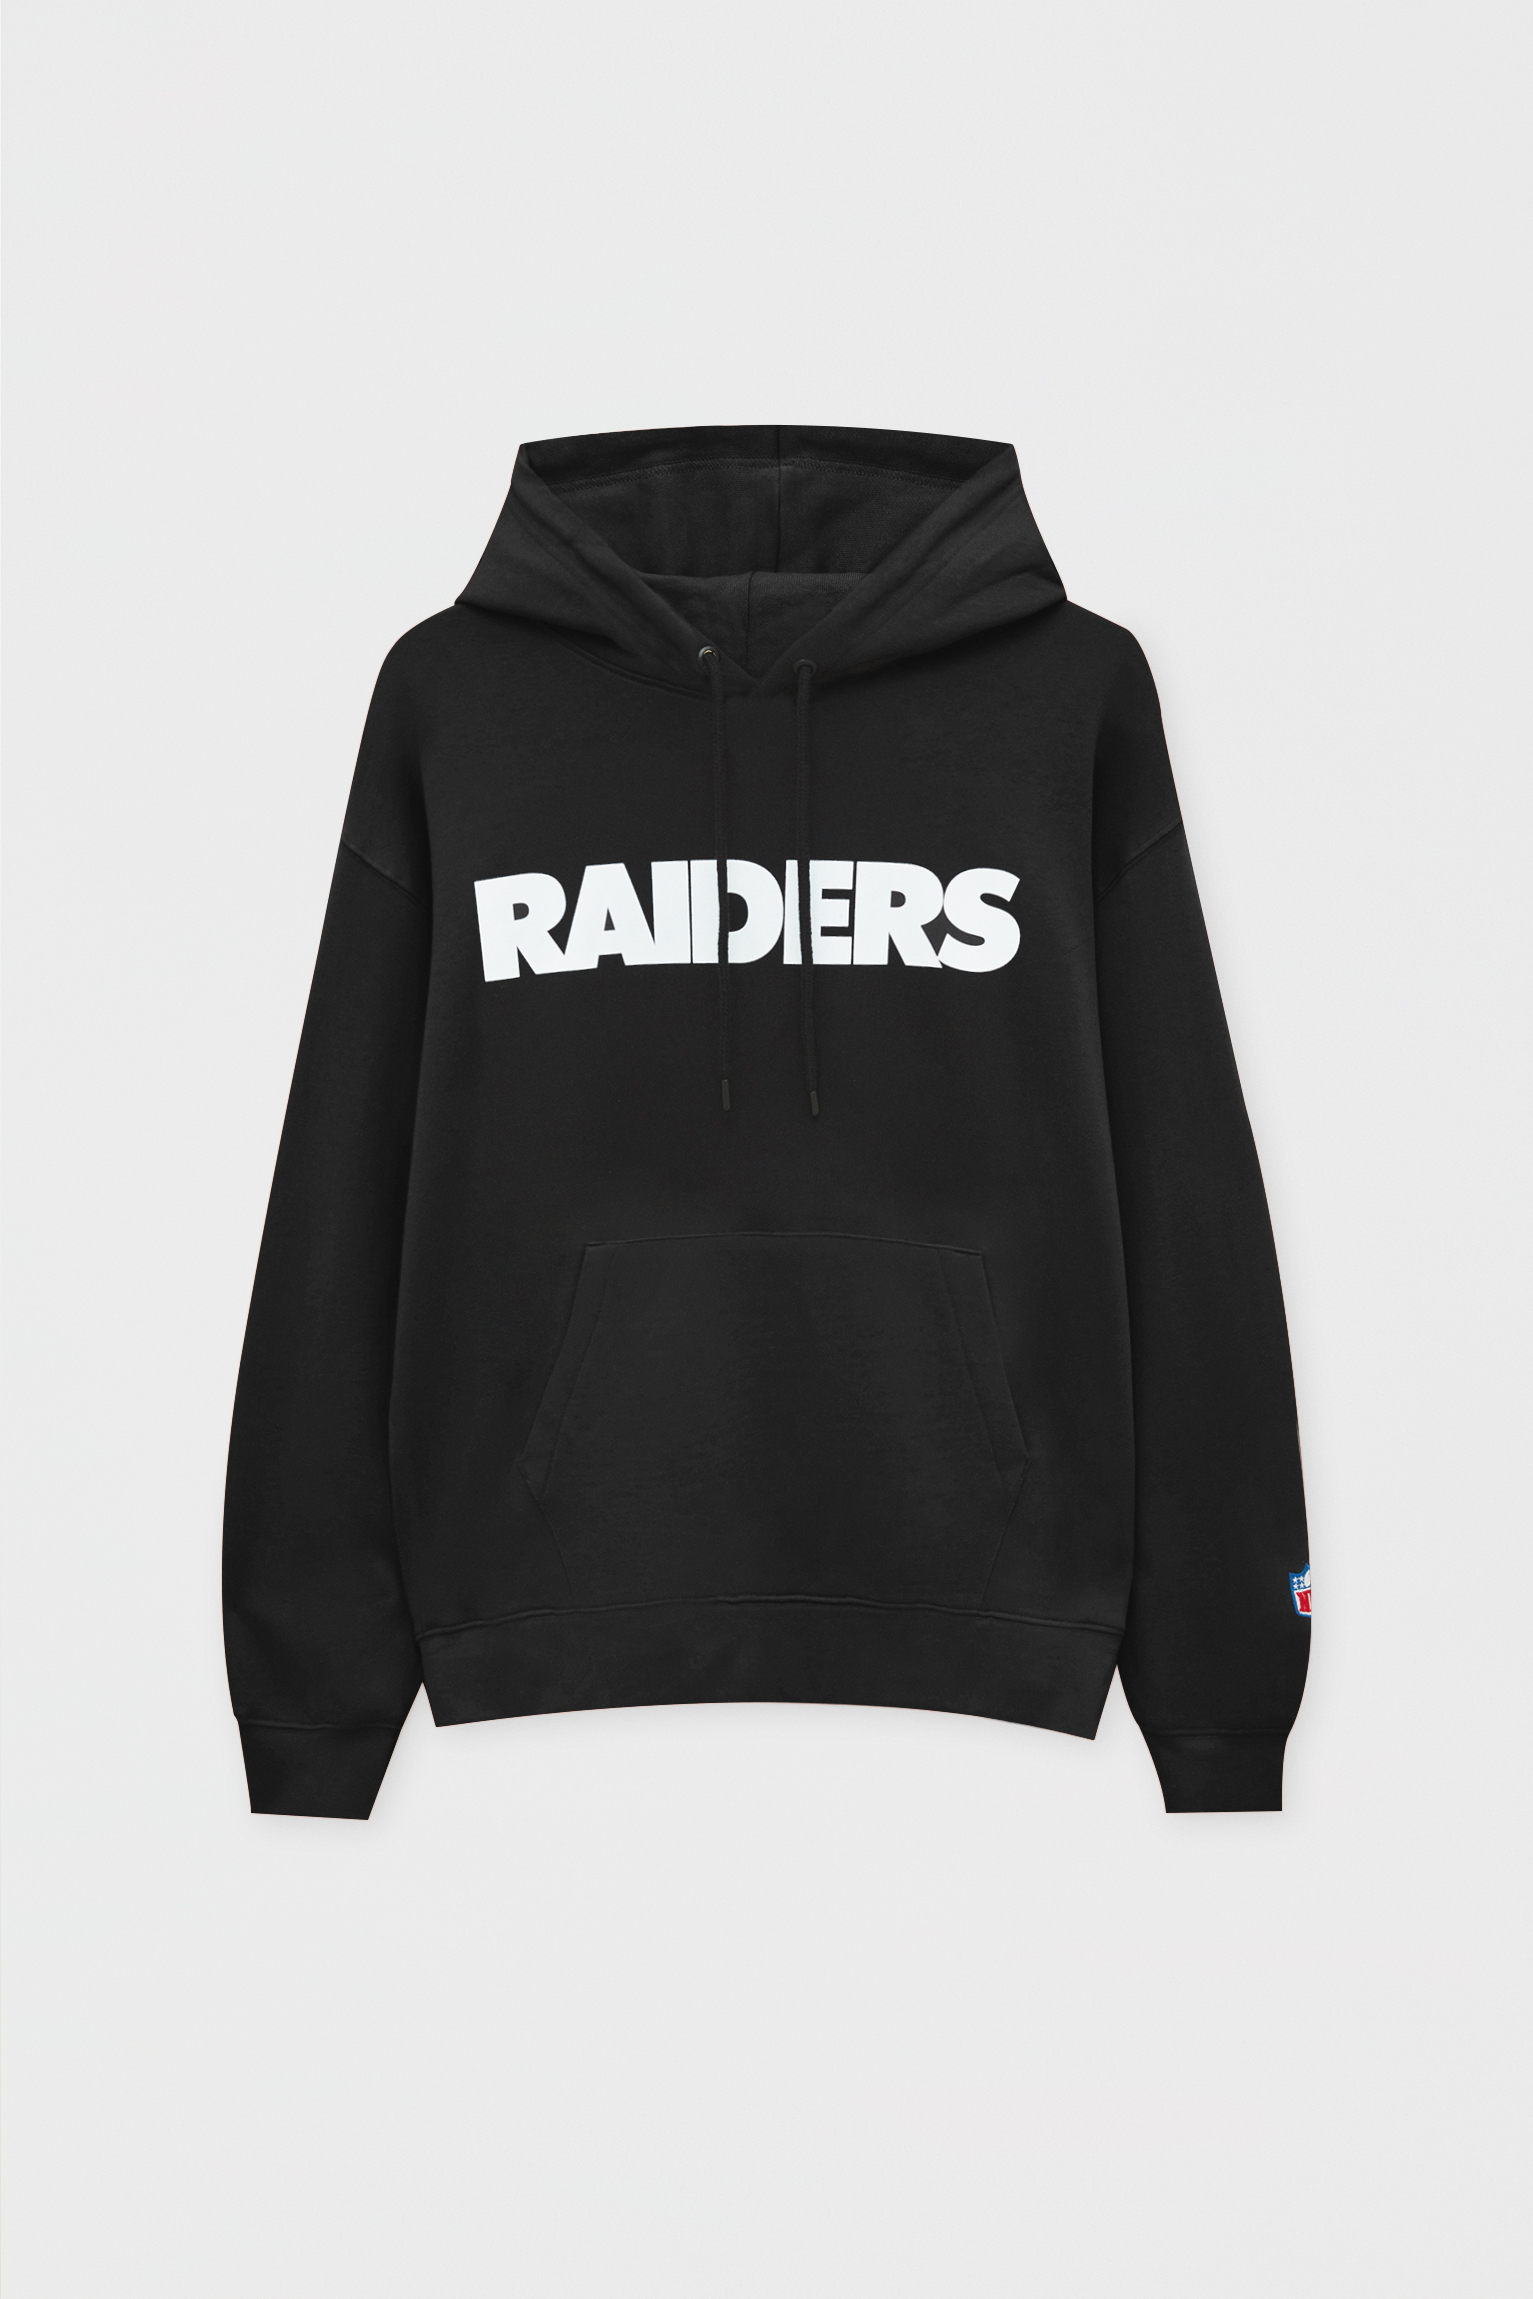 raider sweatshirts hoodies